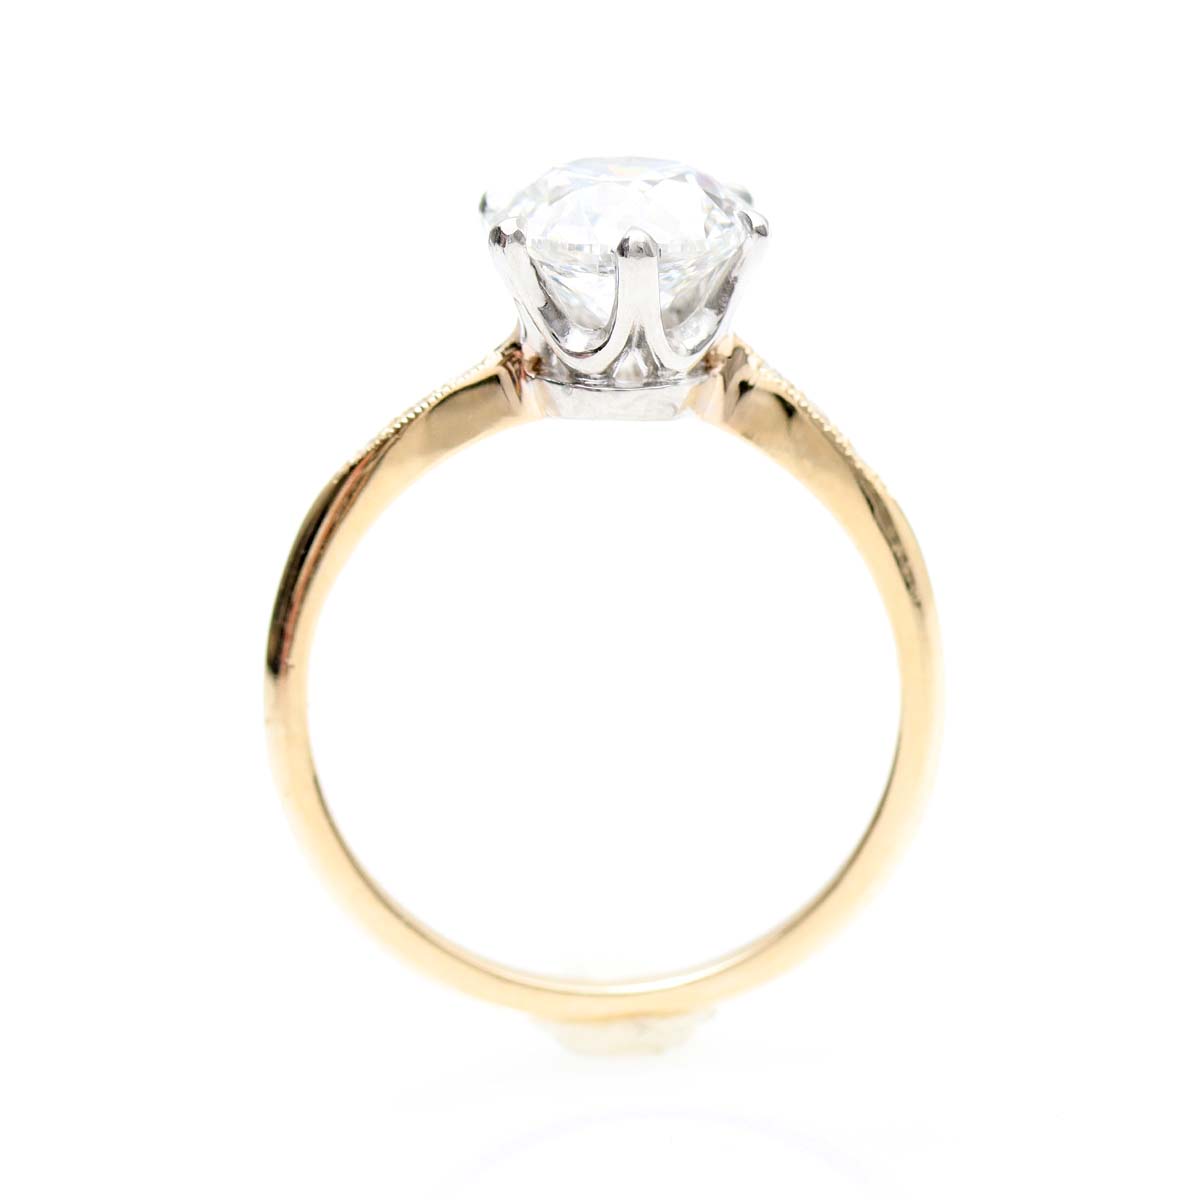 Edwardian Revival Engagement Ring #3604-4